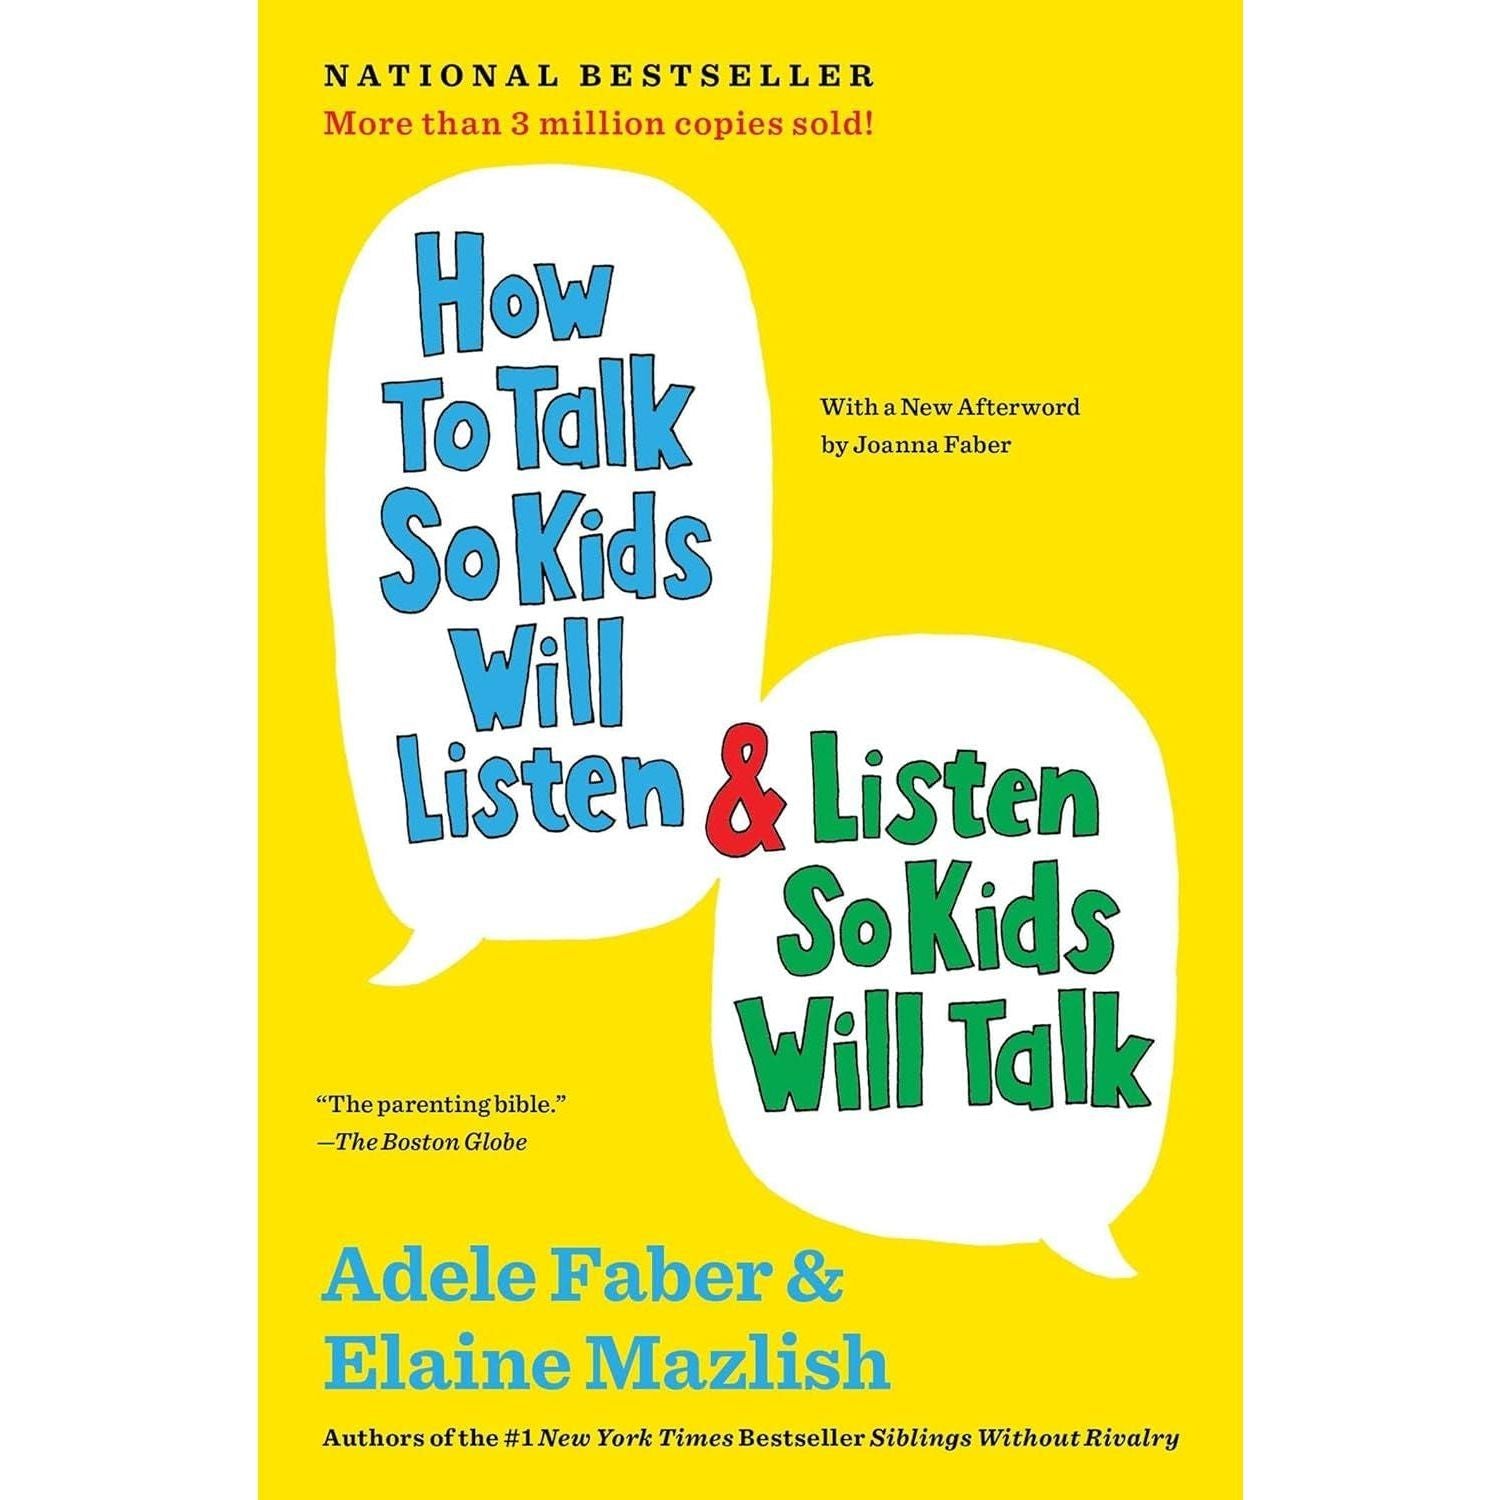 How to Talk so Kids Will Listen & Listen so Kids Will Talk (The How to Talk Series)